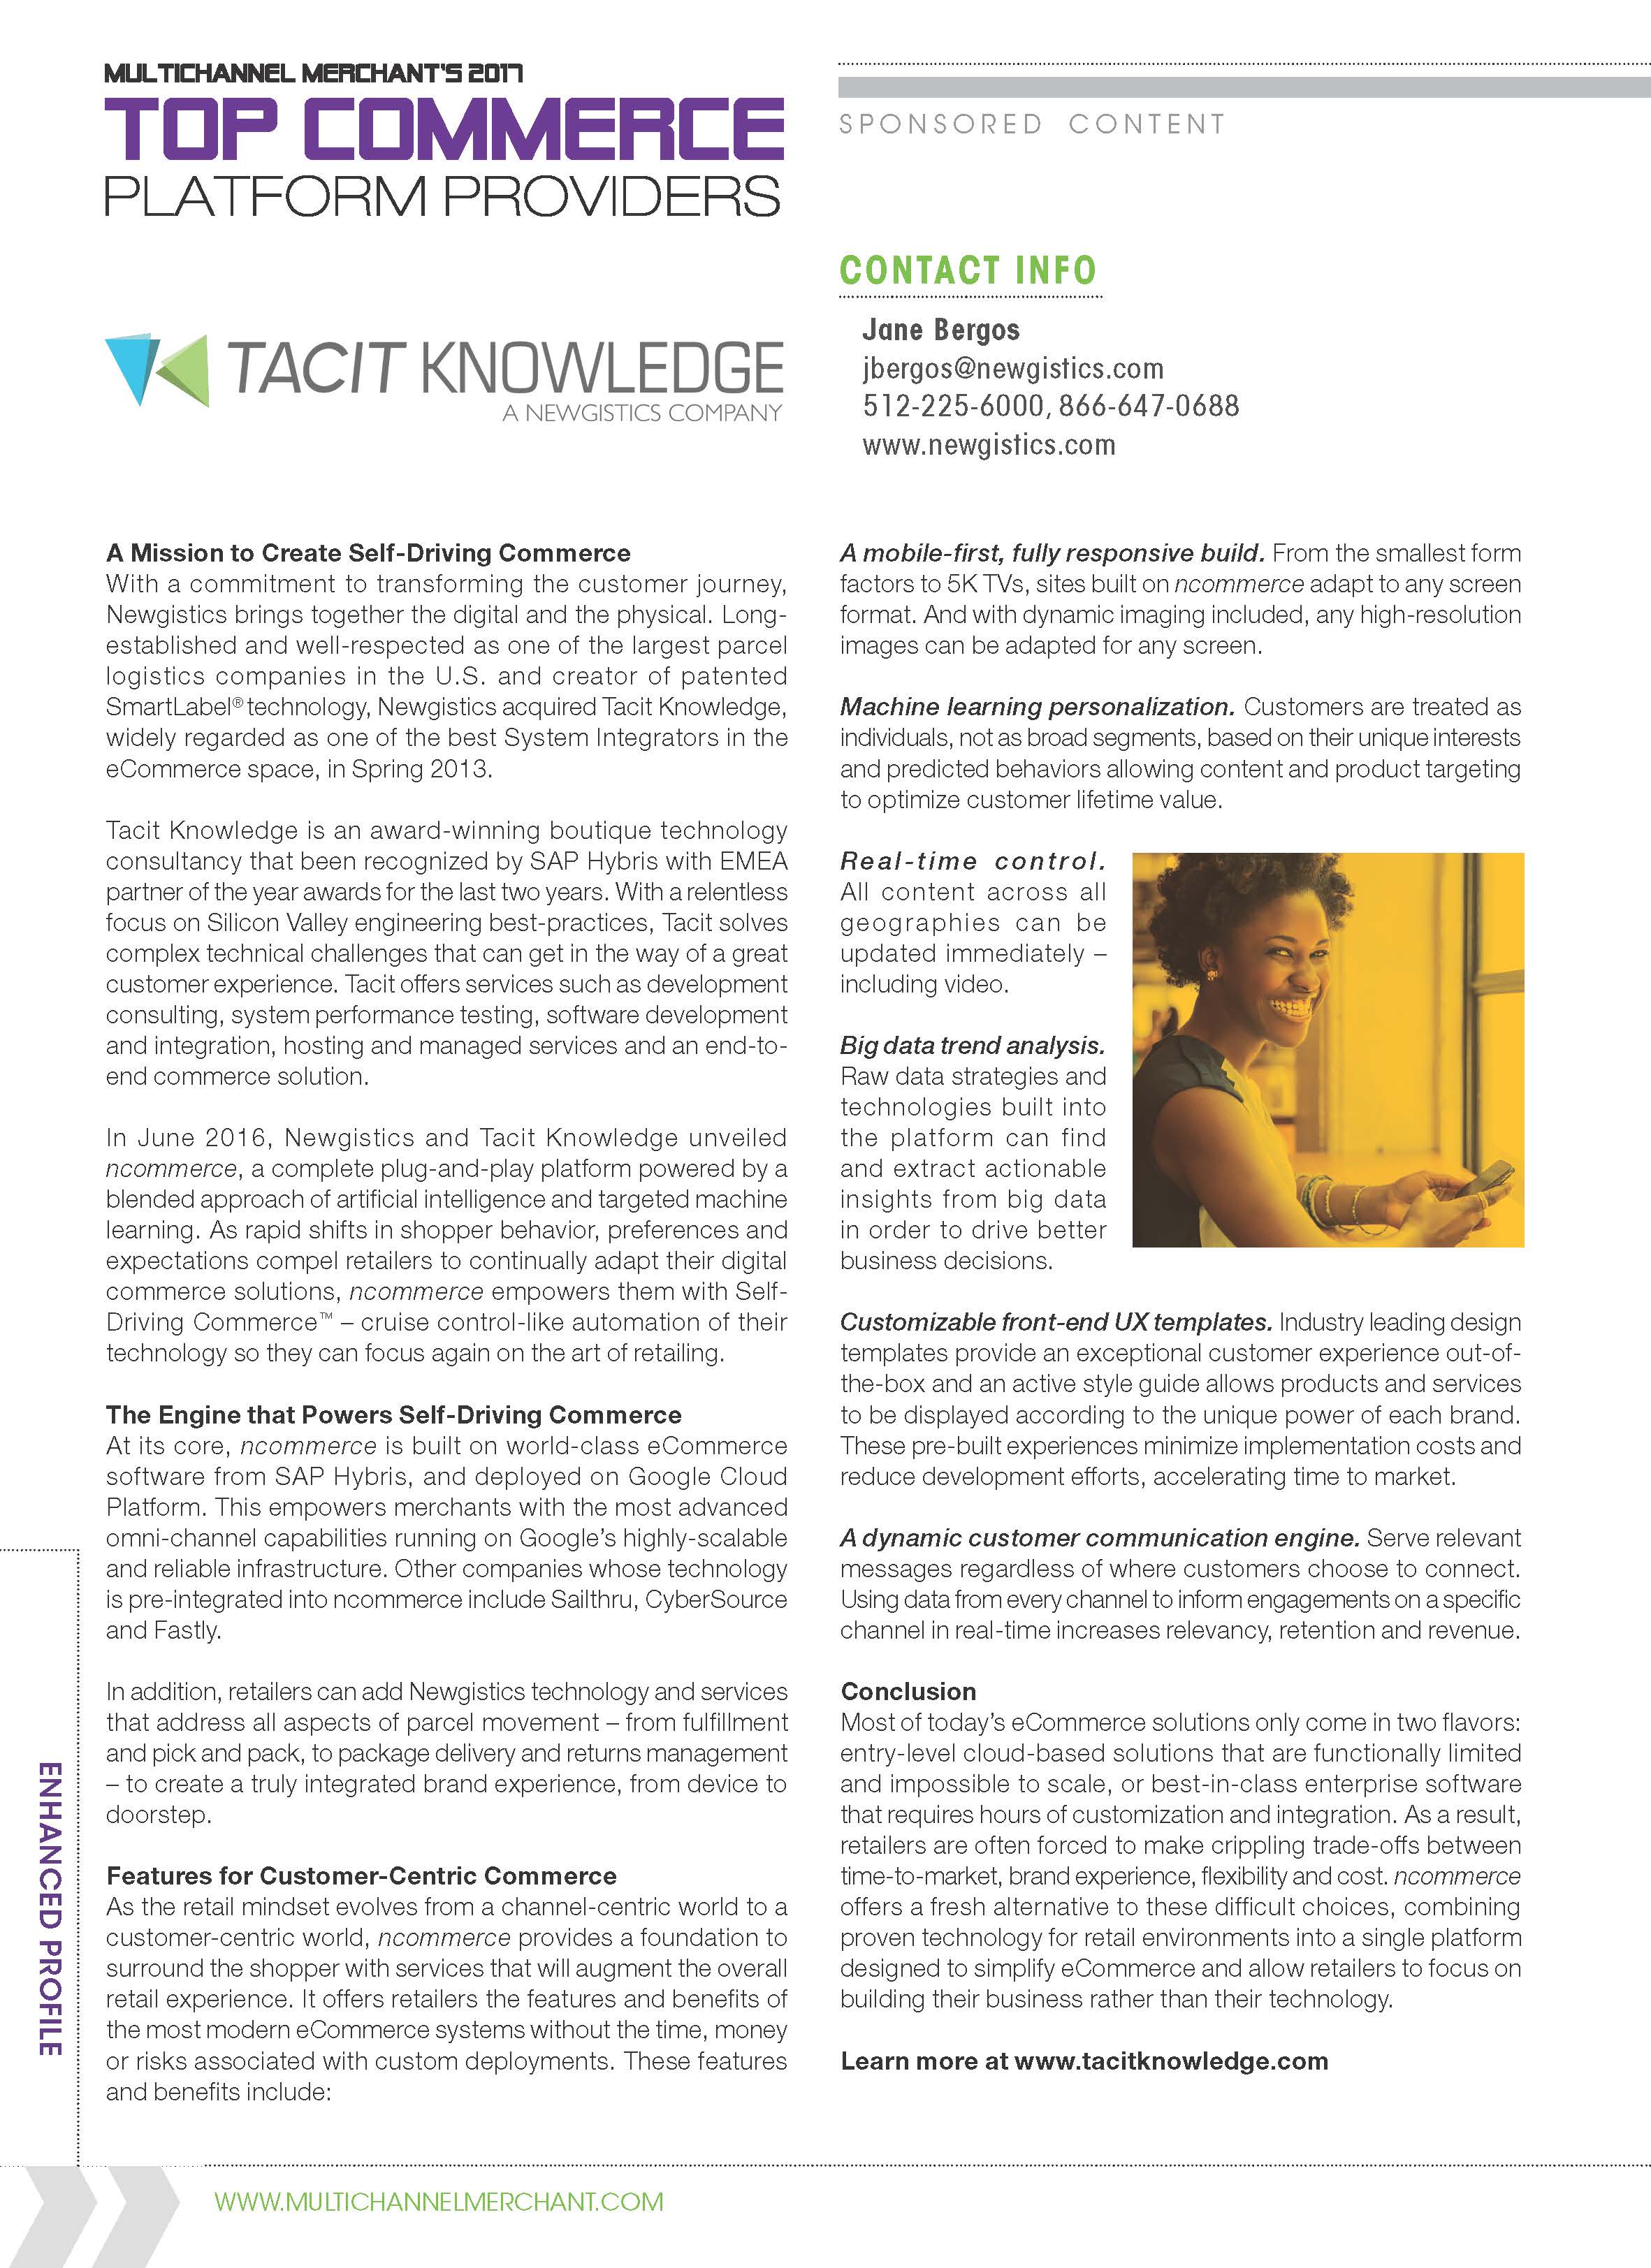 Newgistics/Tacit Company Profile